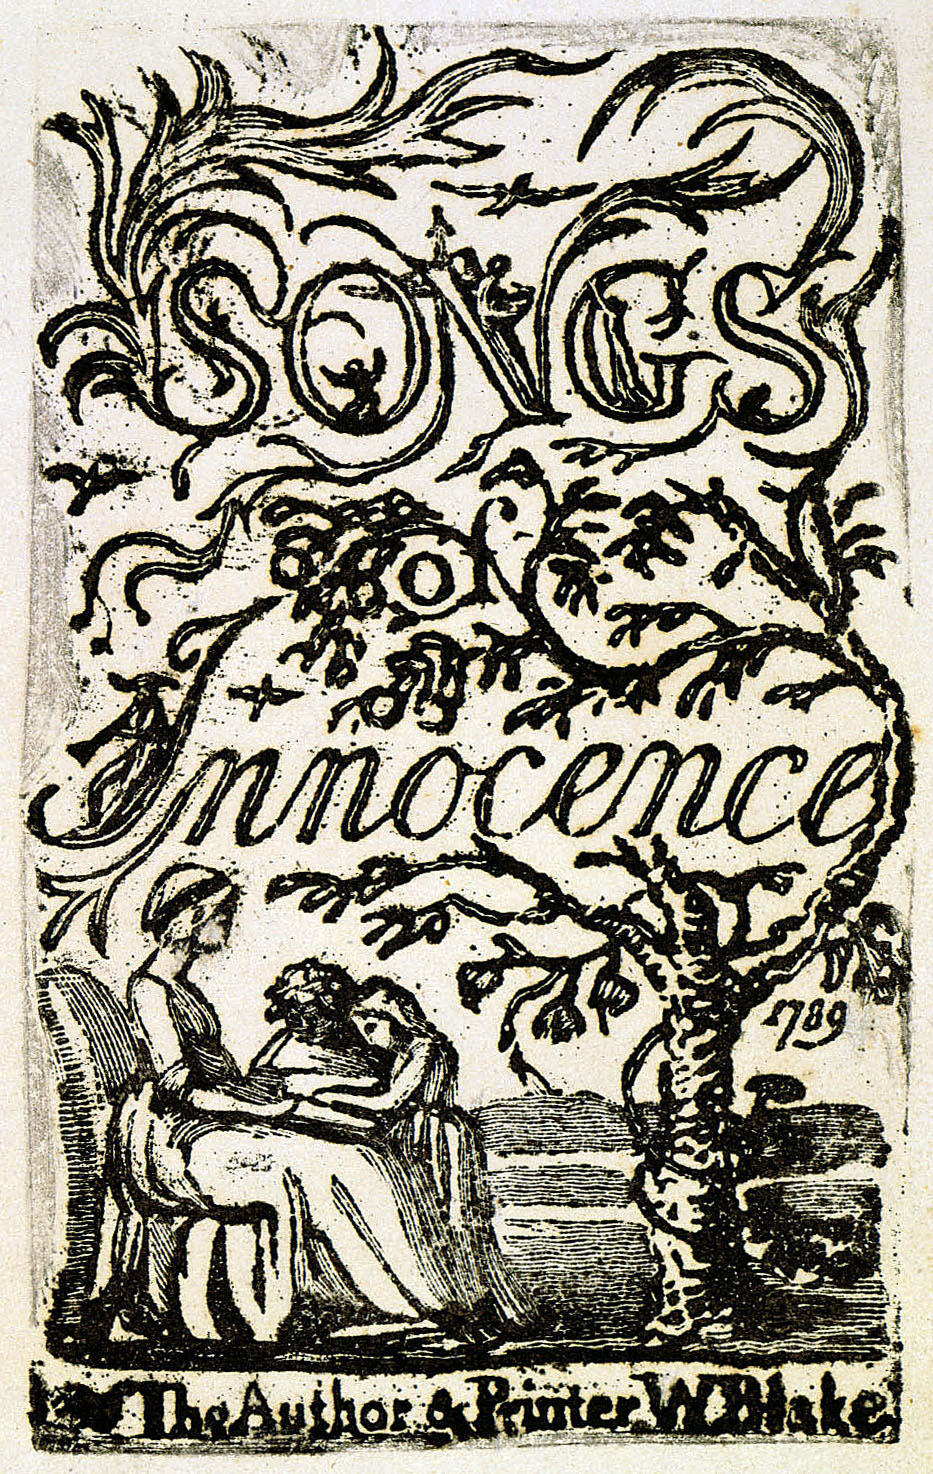 SONGS
                    	of
                    	Innocence
                    	
                    	1789
                    	
                    	The Author & Printer. WBlake